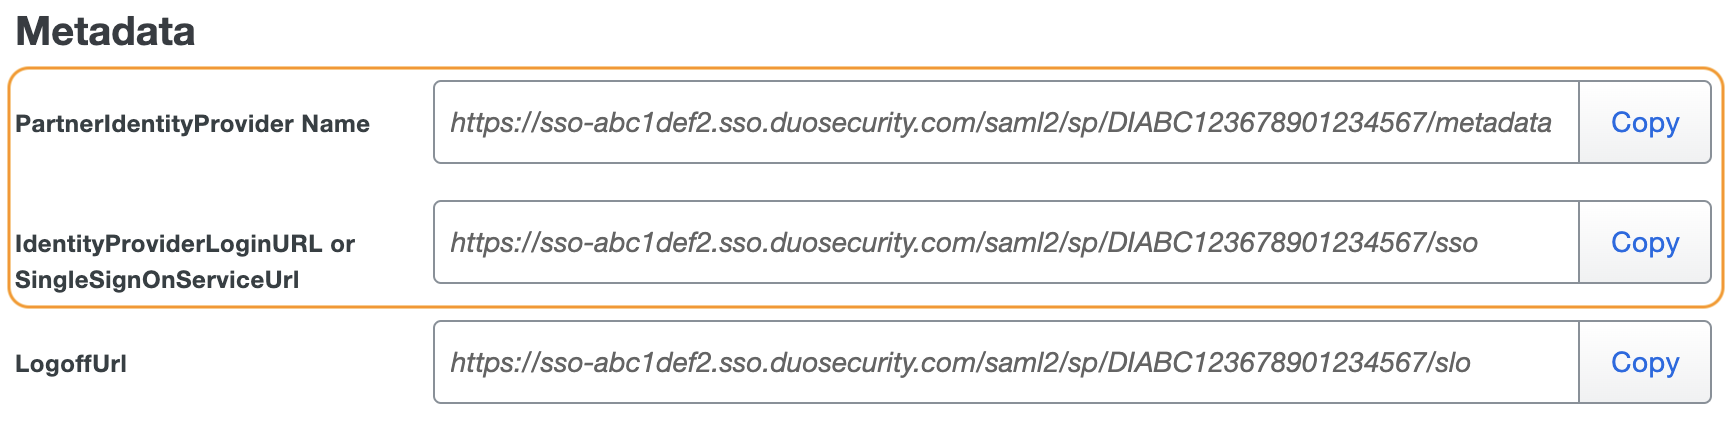 Duo CyberArk Privileged Access Partner IdP Name URL and SSO Service URL